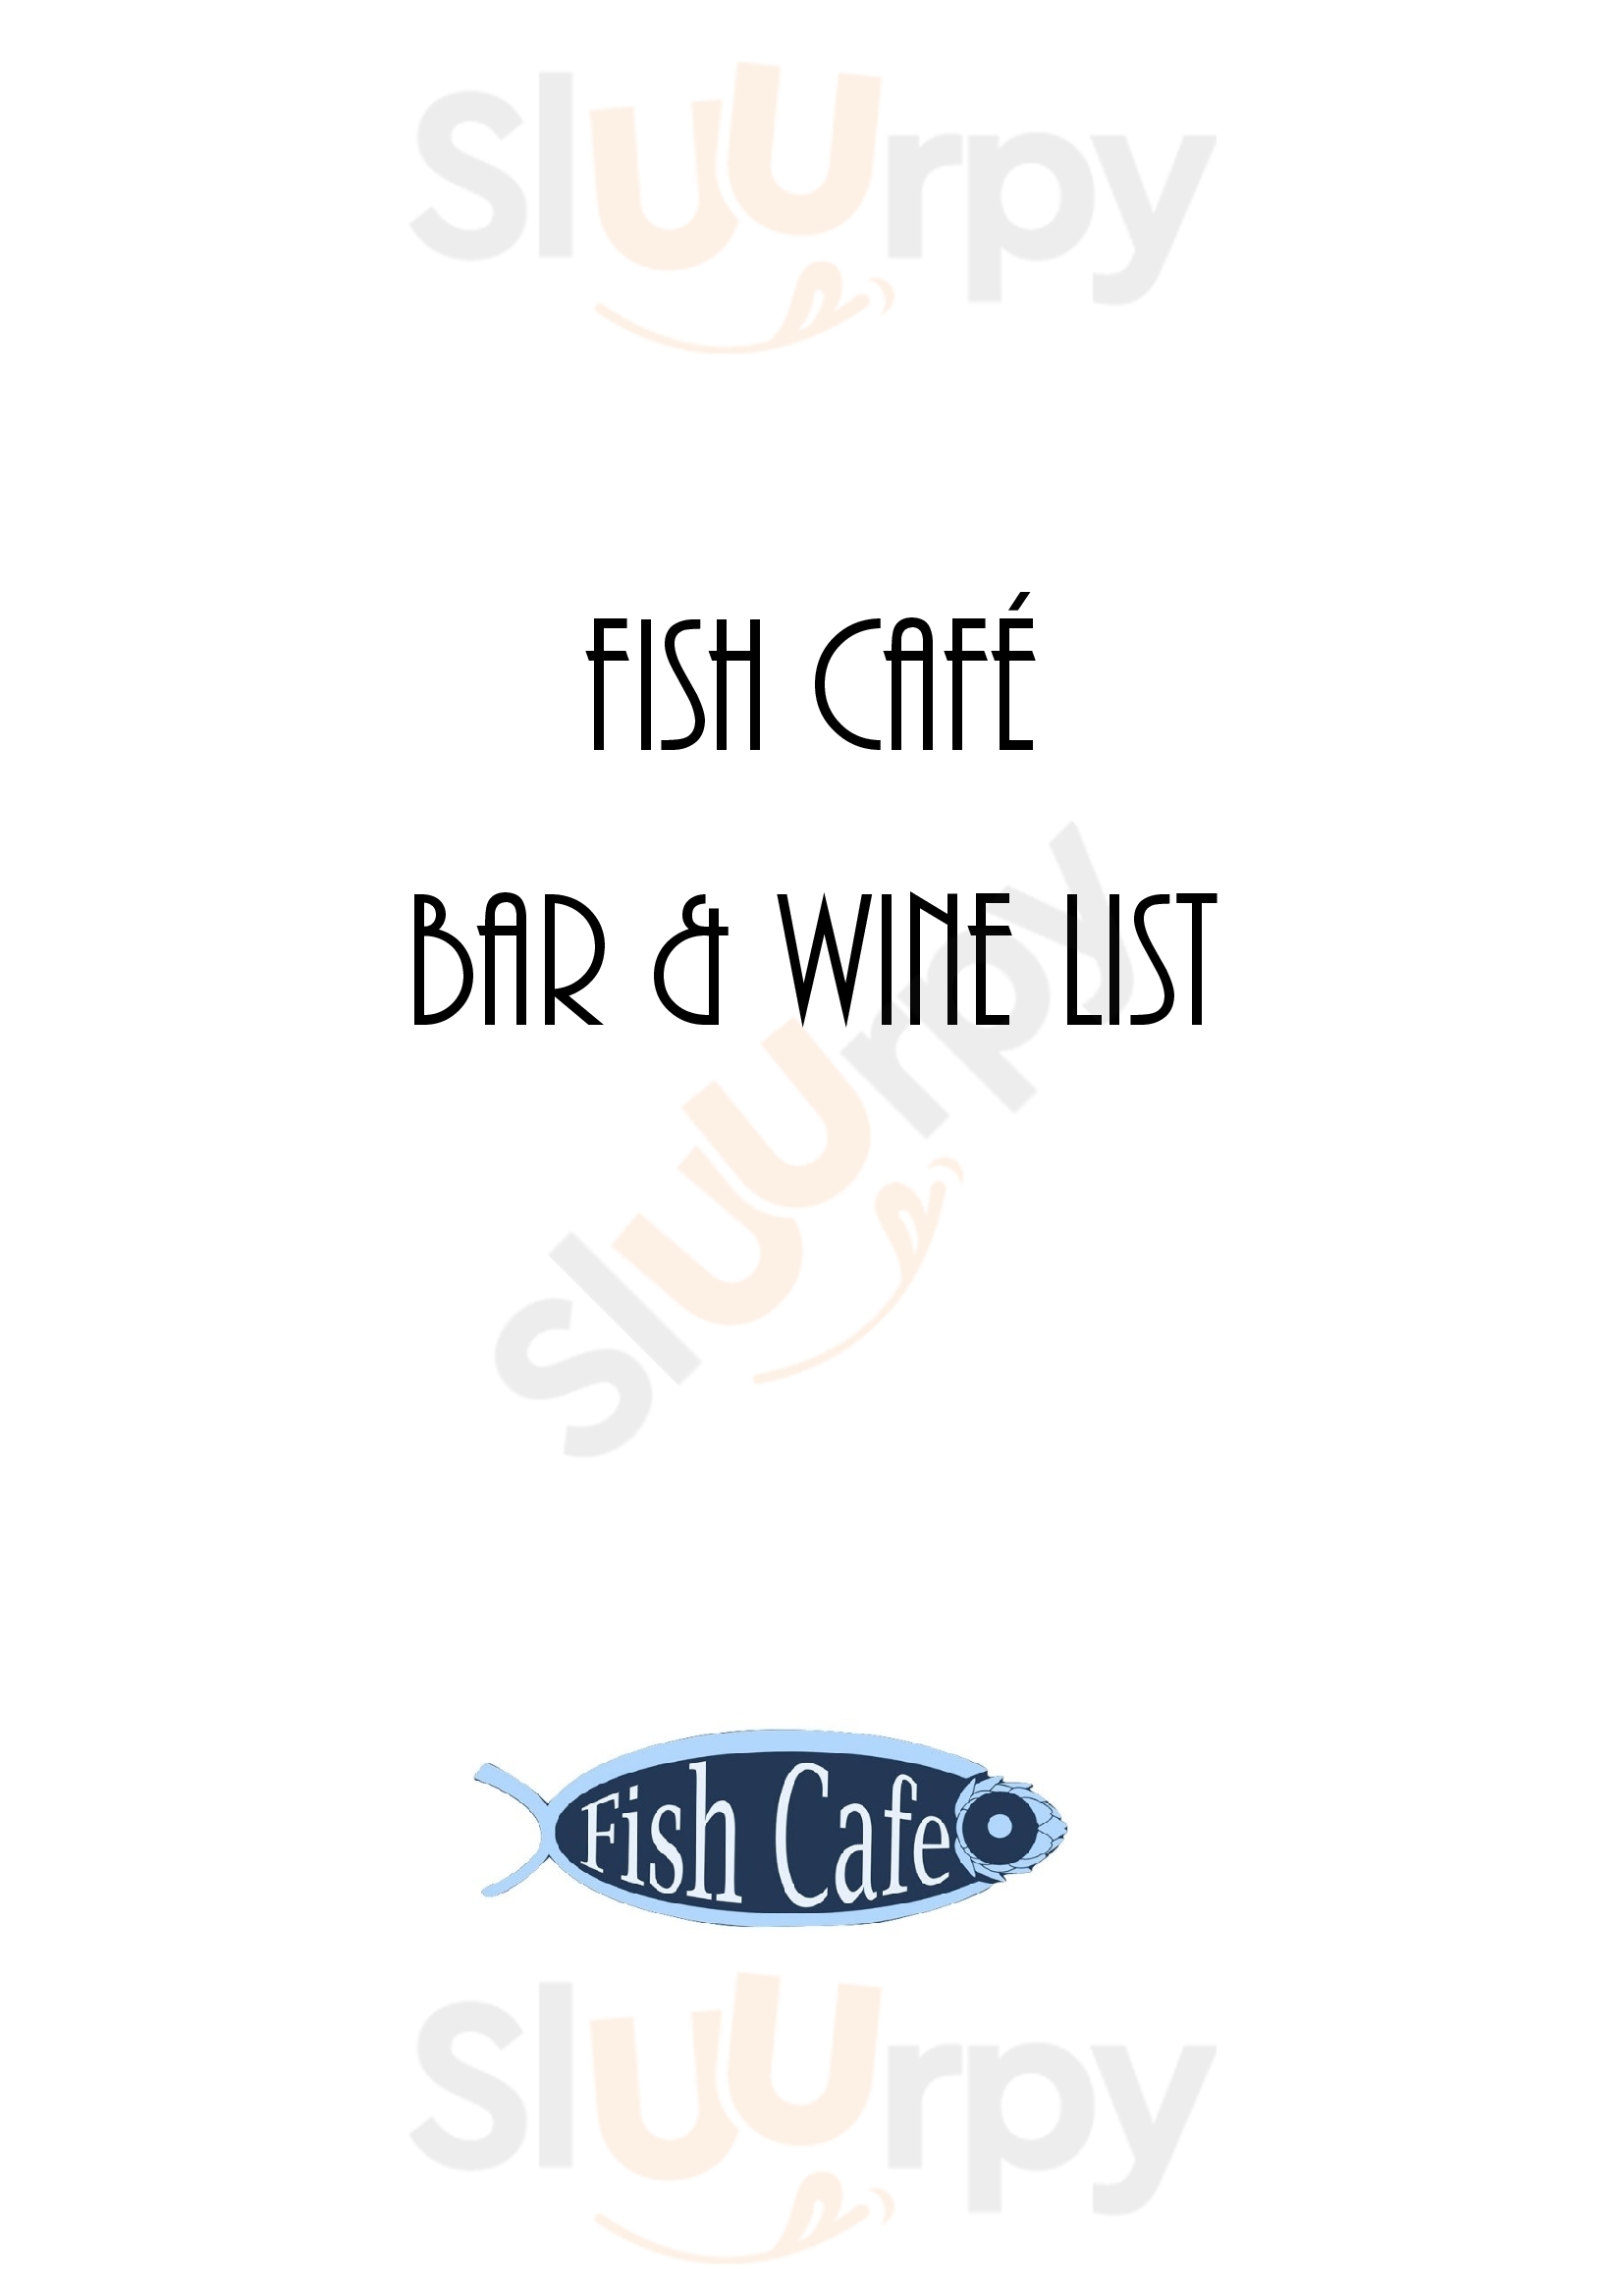 Fish Cafe London Menu - 1